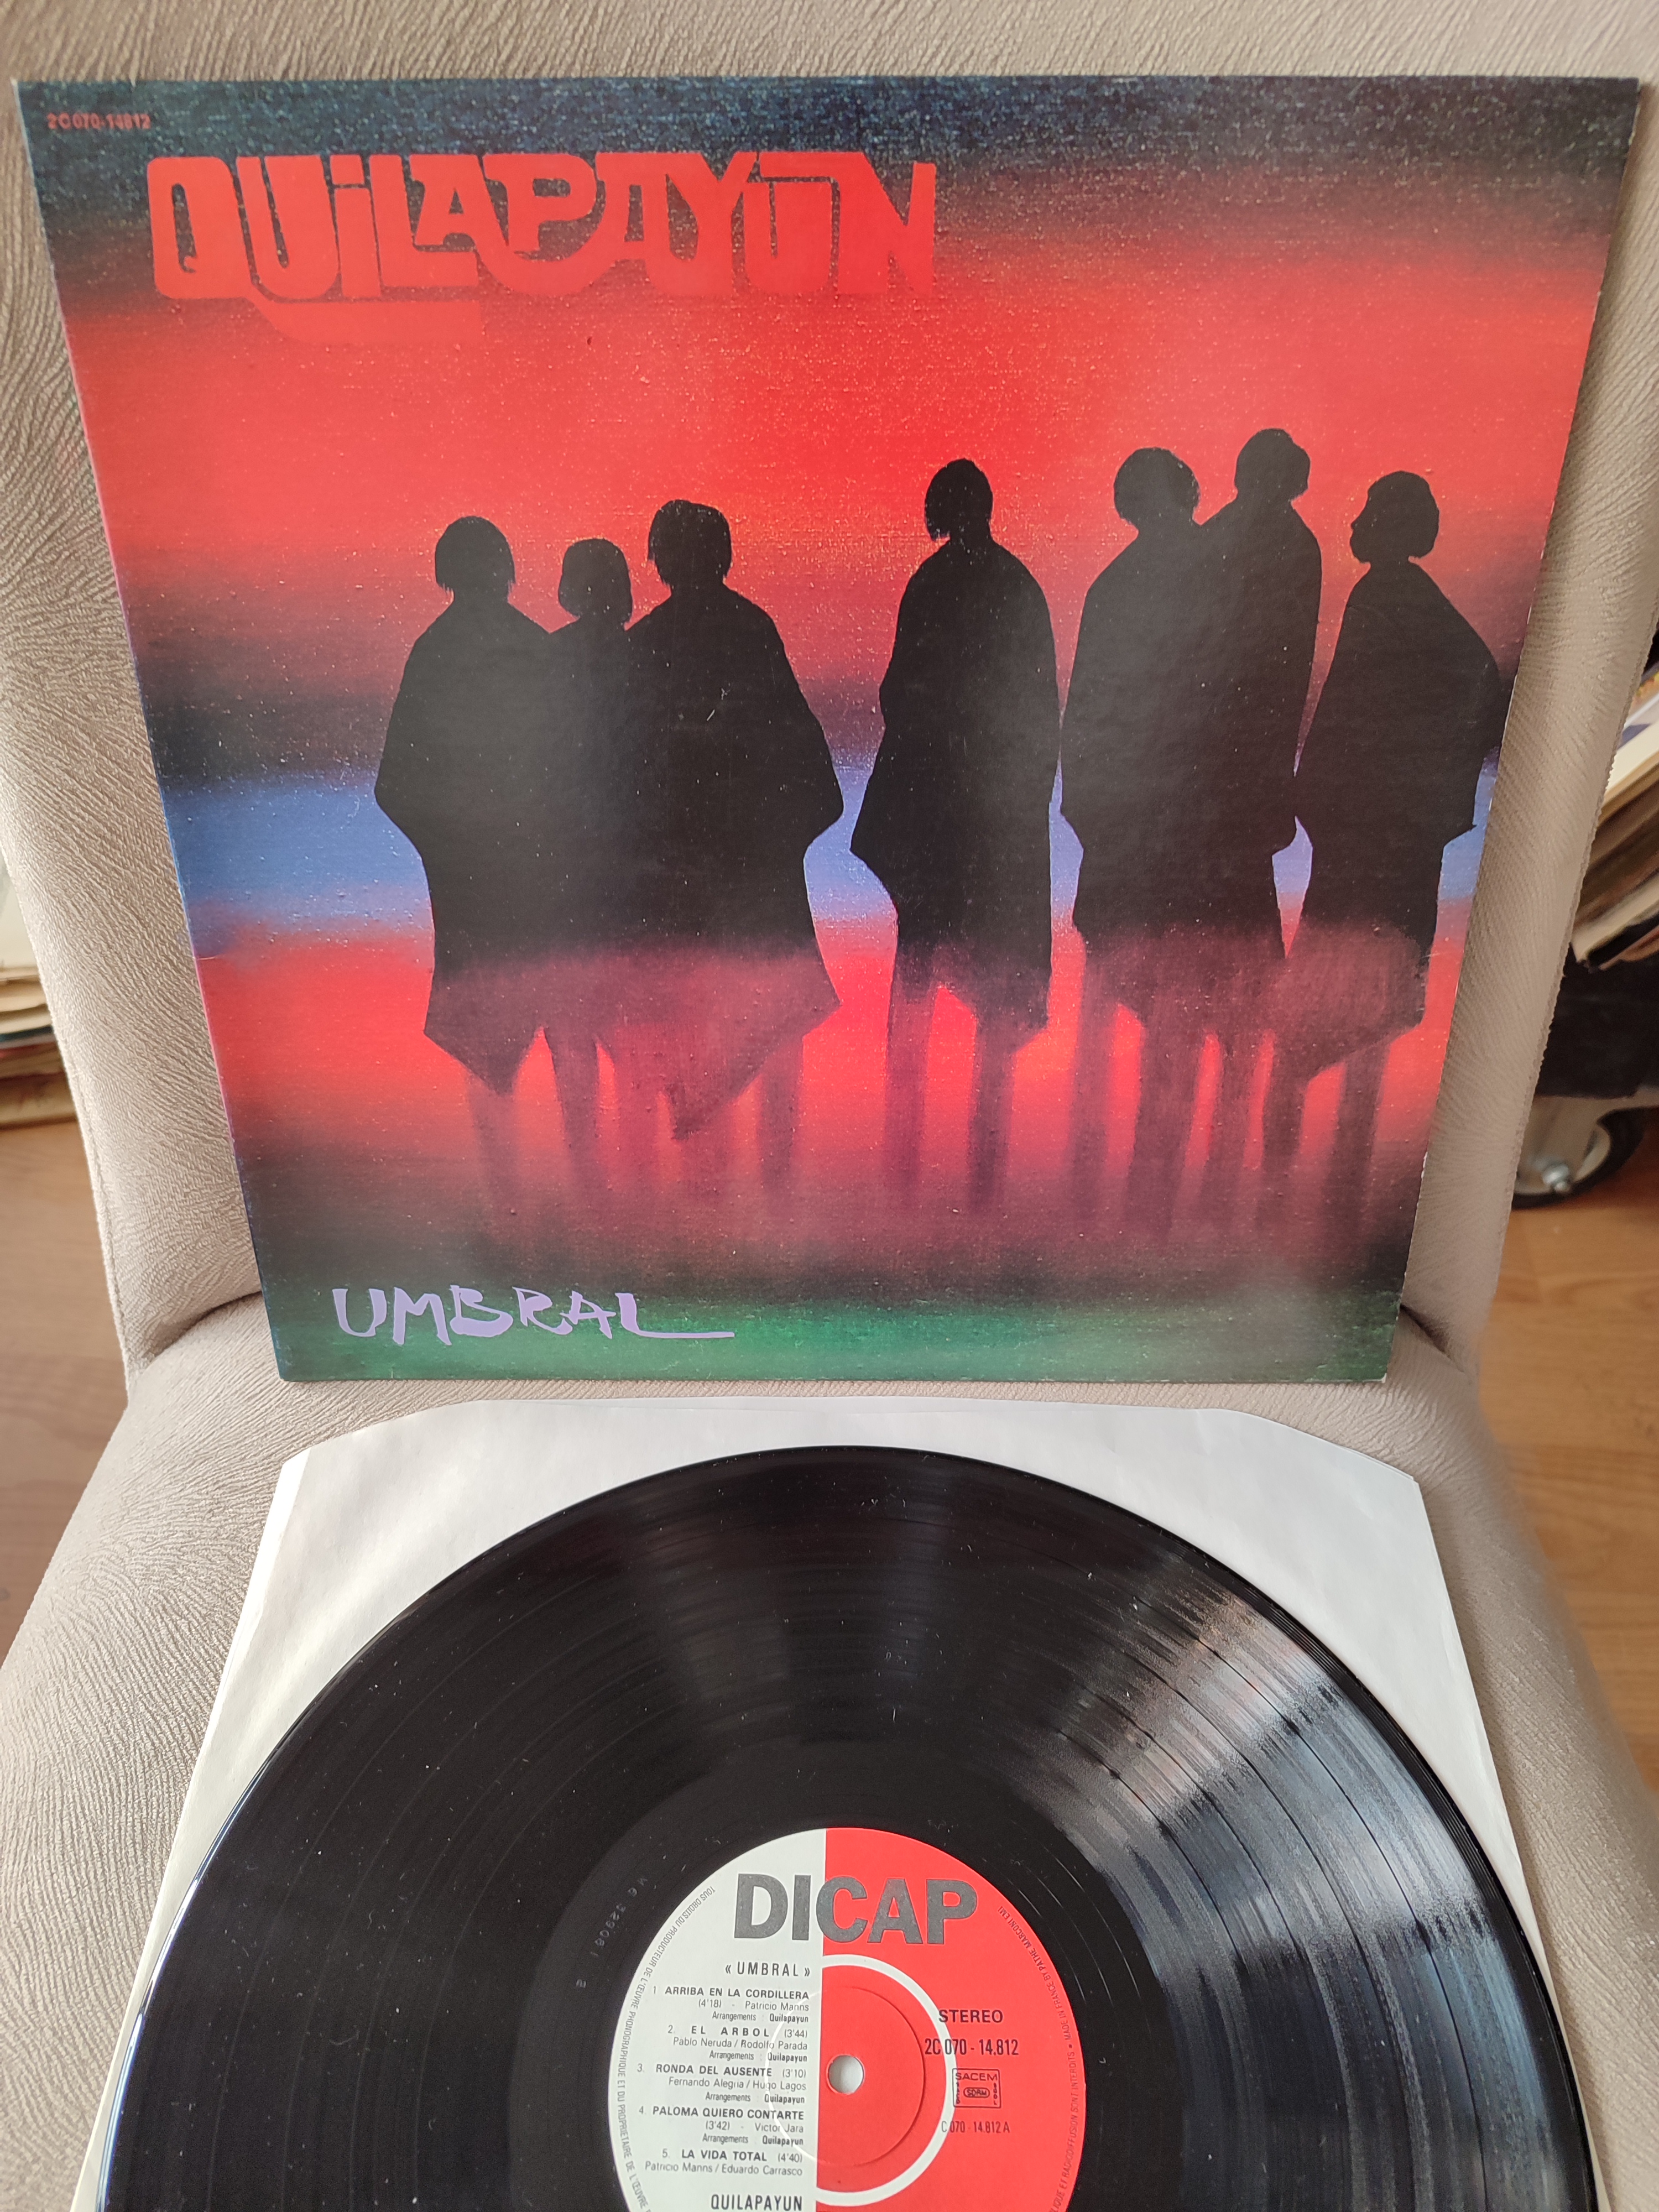 QUILAPAYUN - Umbral - 1979 Fransa Basım 33lük LP Albüm 2. el